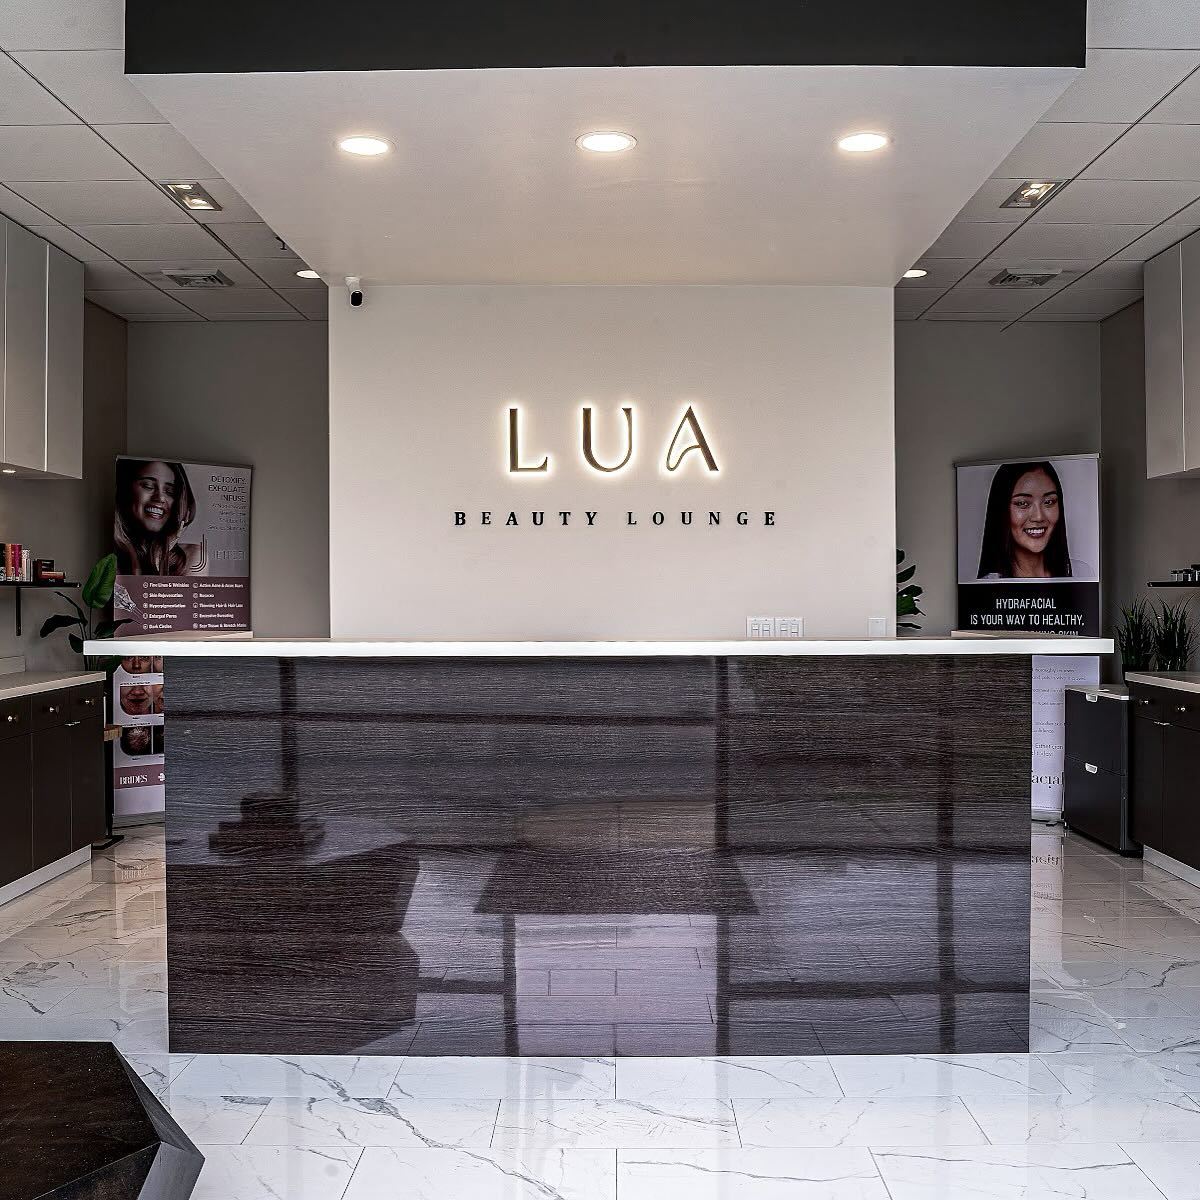 Lua Beauty Lounge 127 Faunce Corner Rd, North Dartmouth Massachusetts 02747